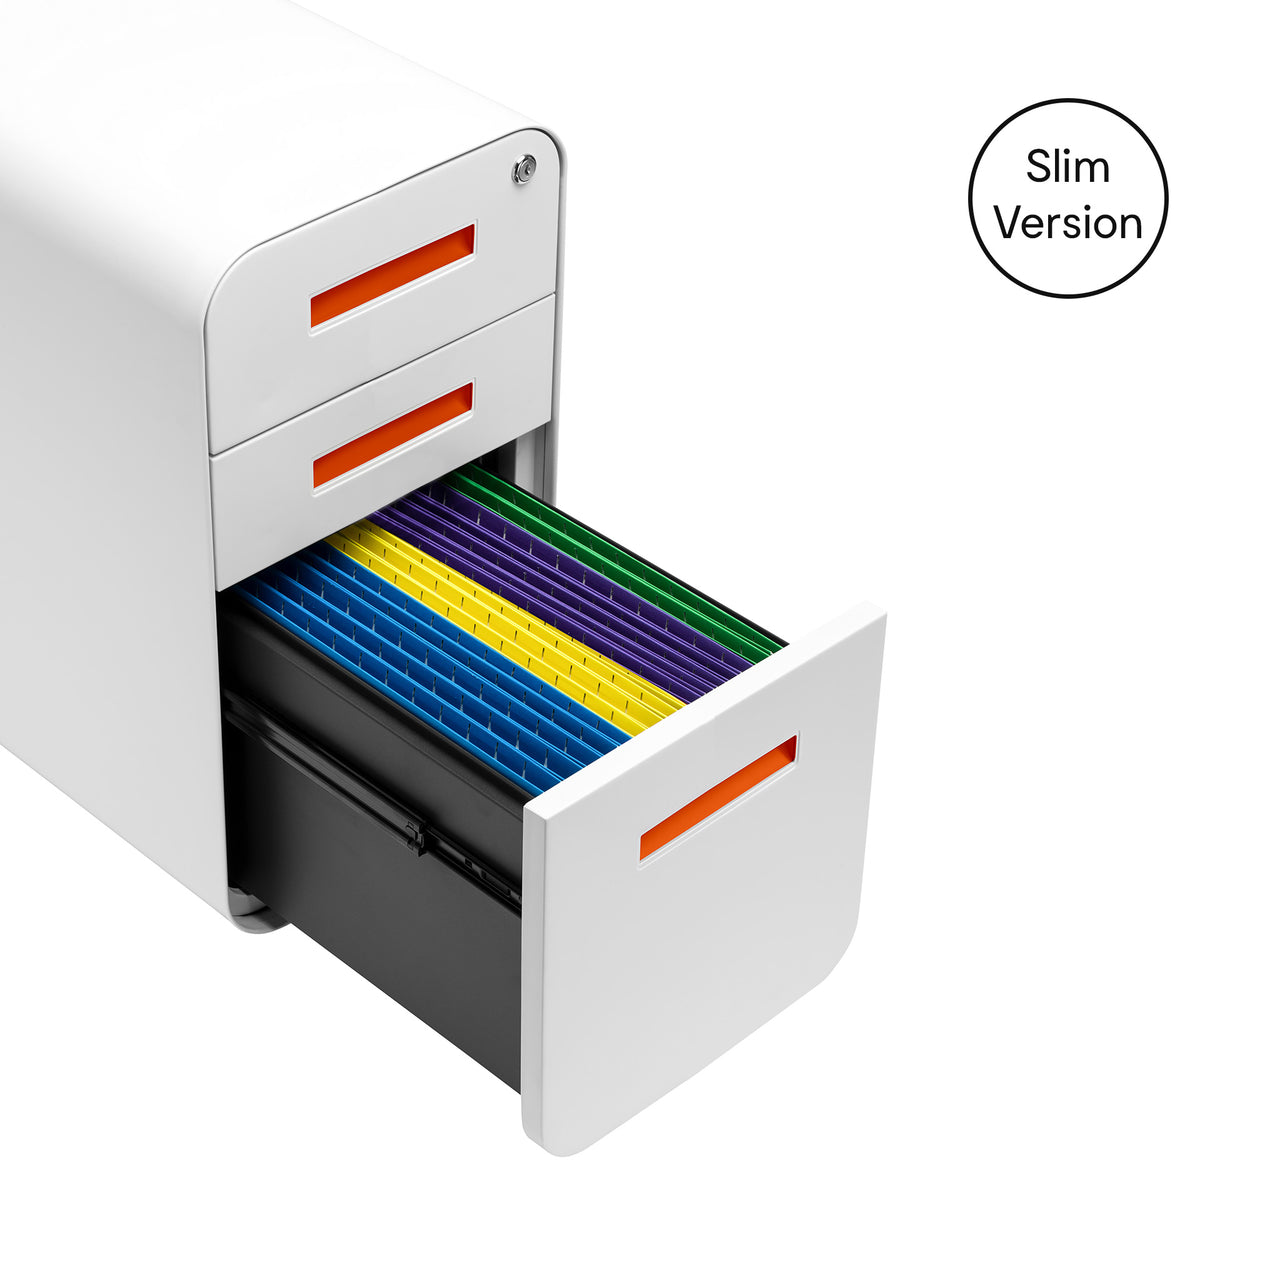 Stockpile Slim File Cabinet (White/Orange)